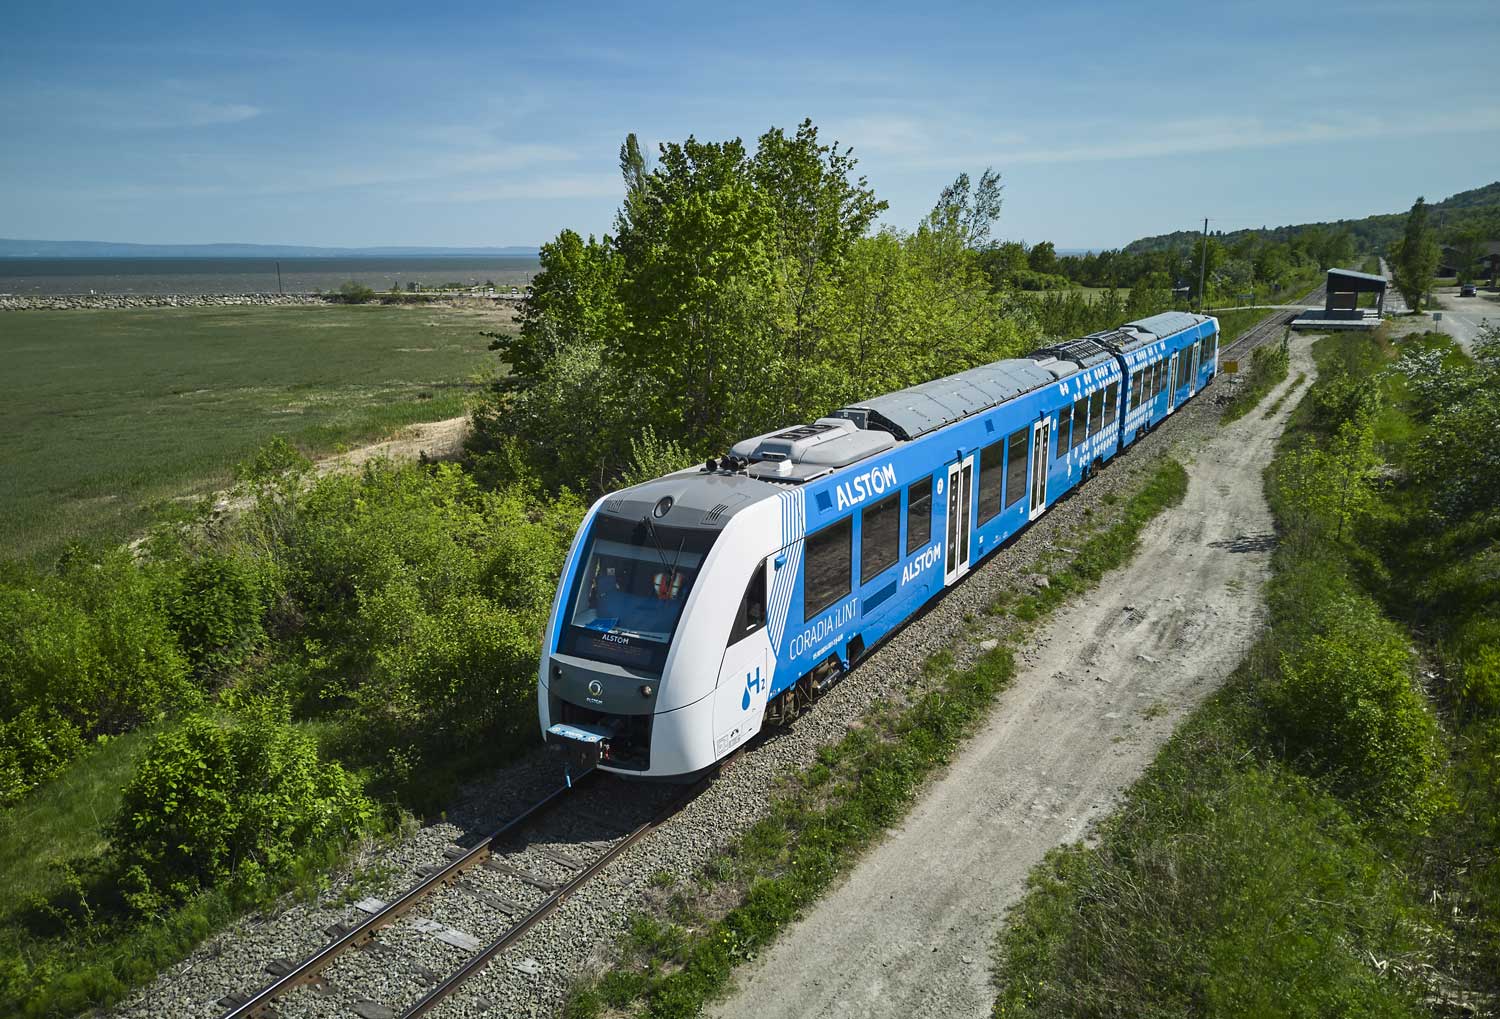 Train hydrogène : Alstom valide ses tests au Québec